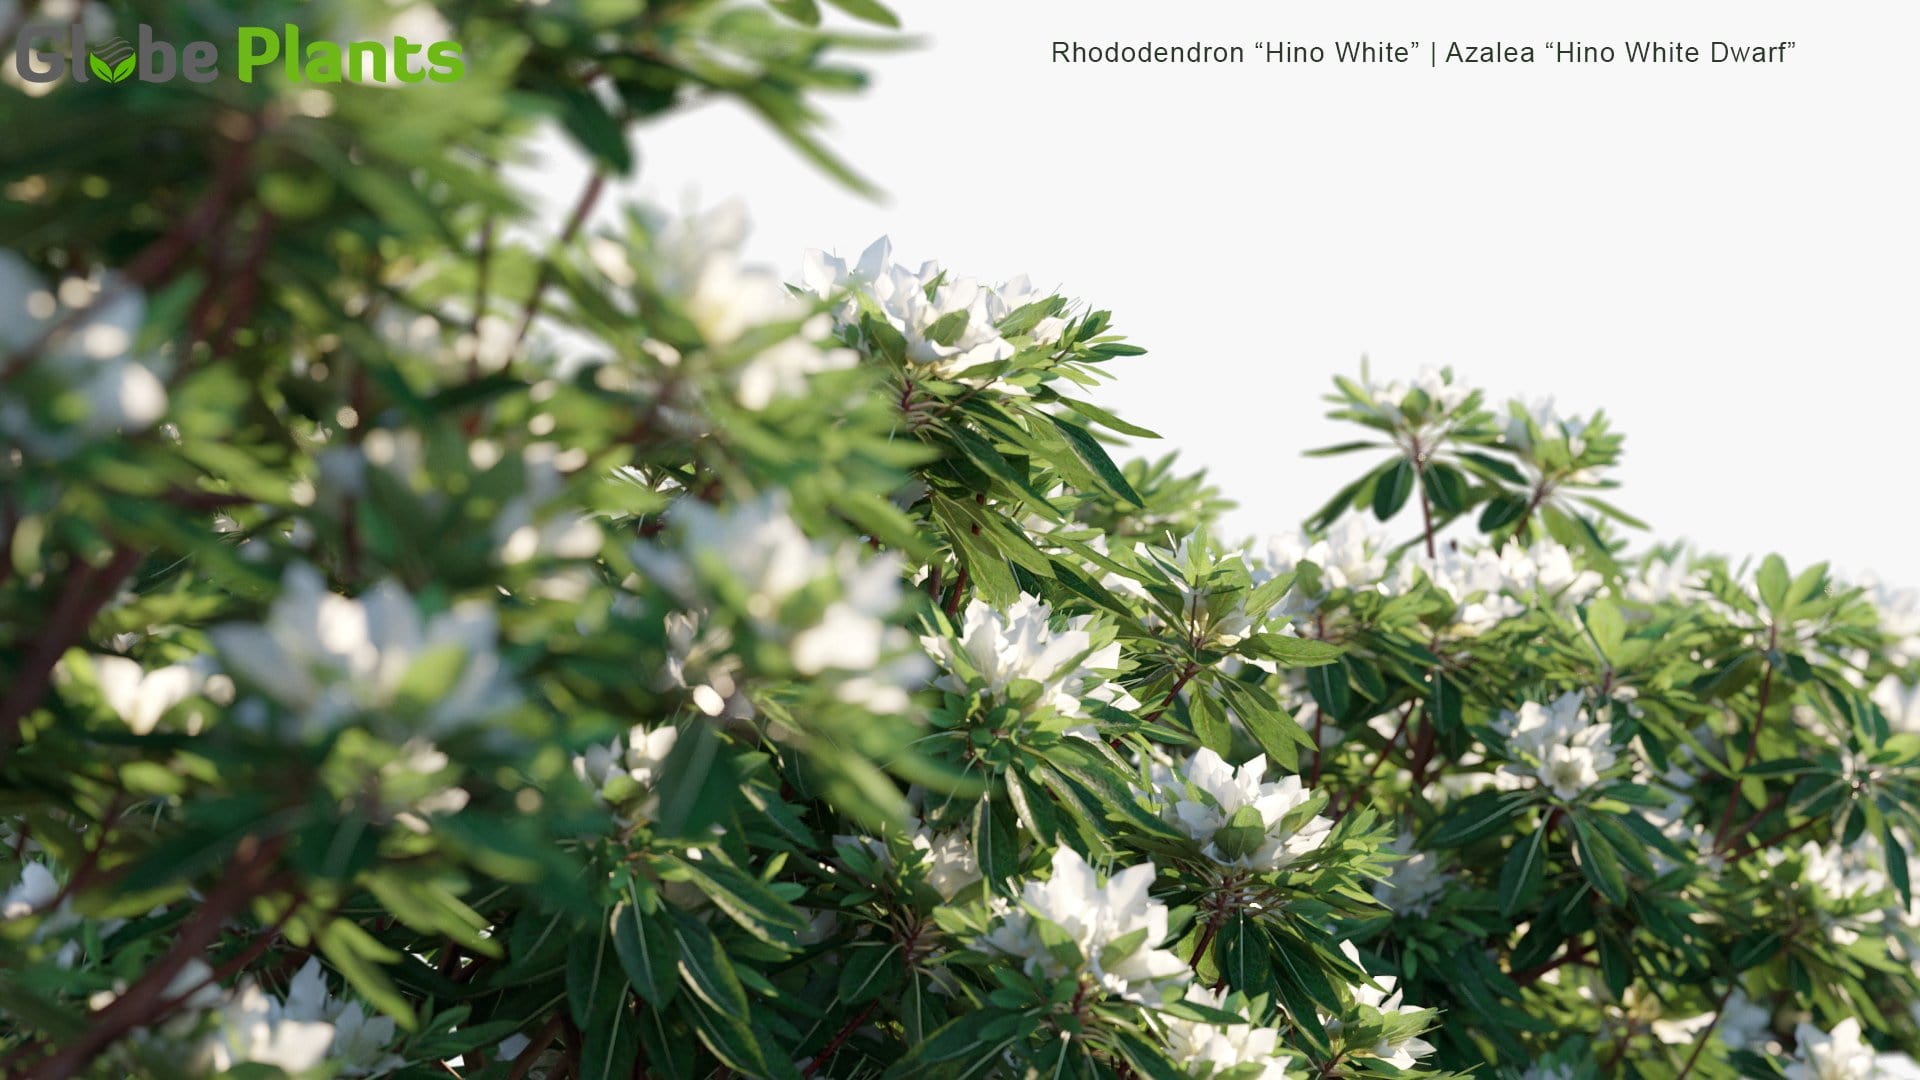 Rhododendron "Hino White" - Azalea "Hino White Dwarf", Japanese Azalea (3D Model)